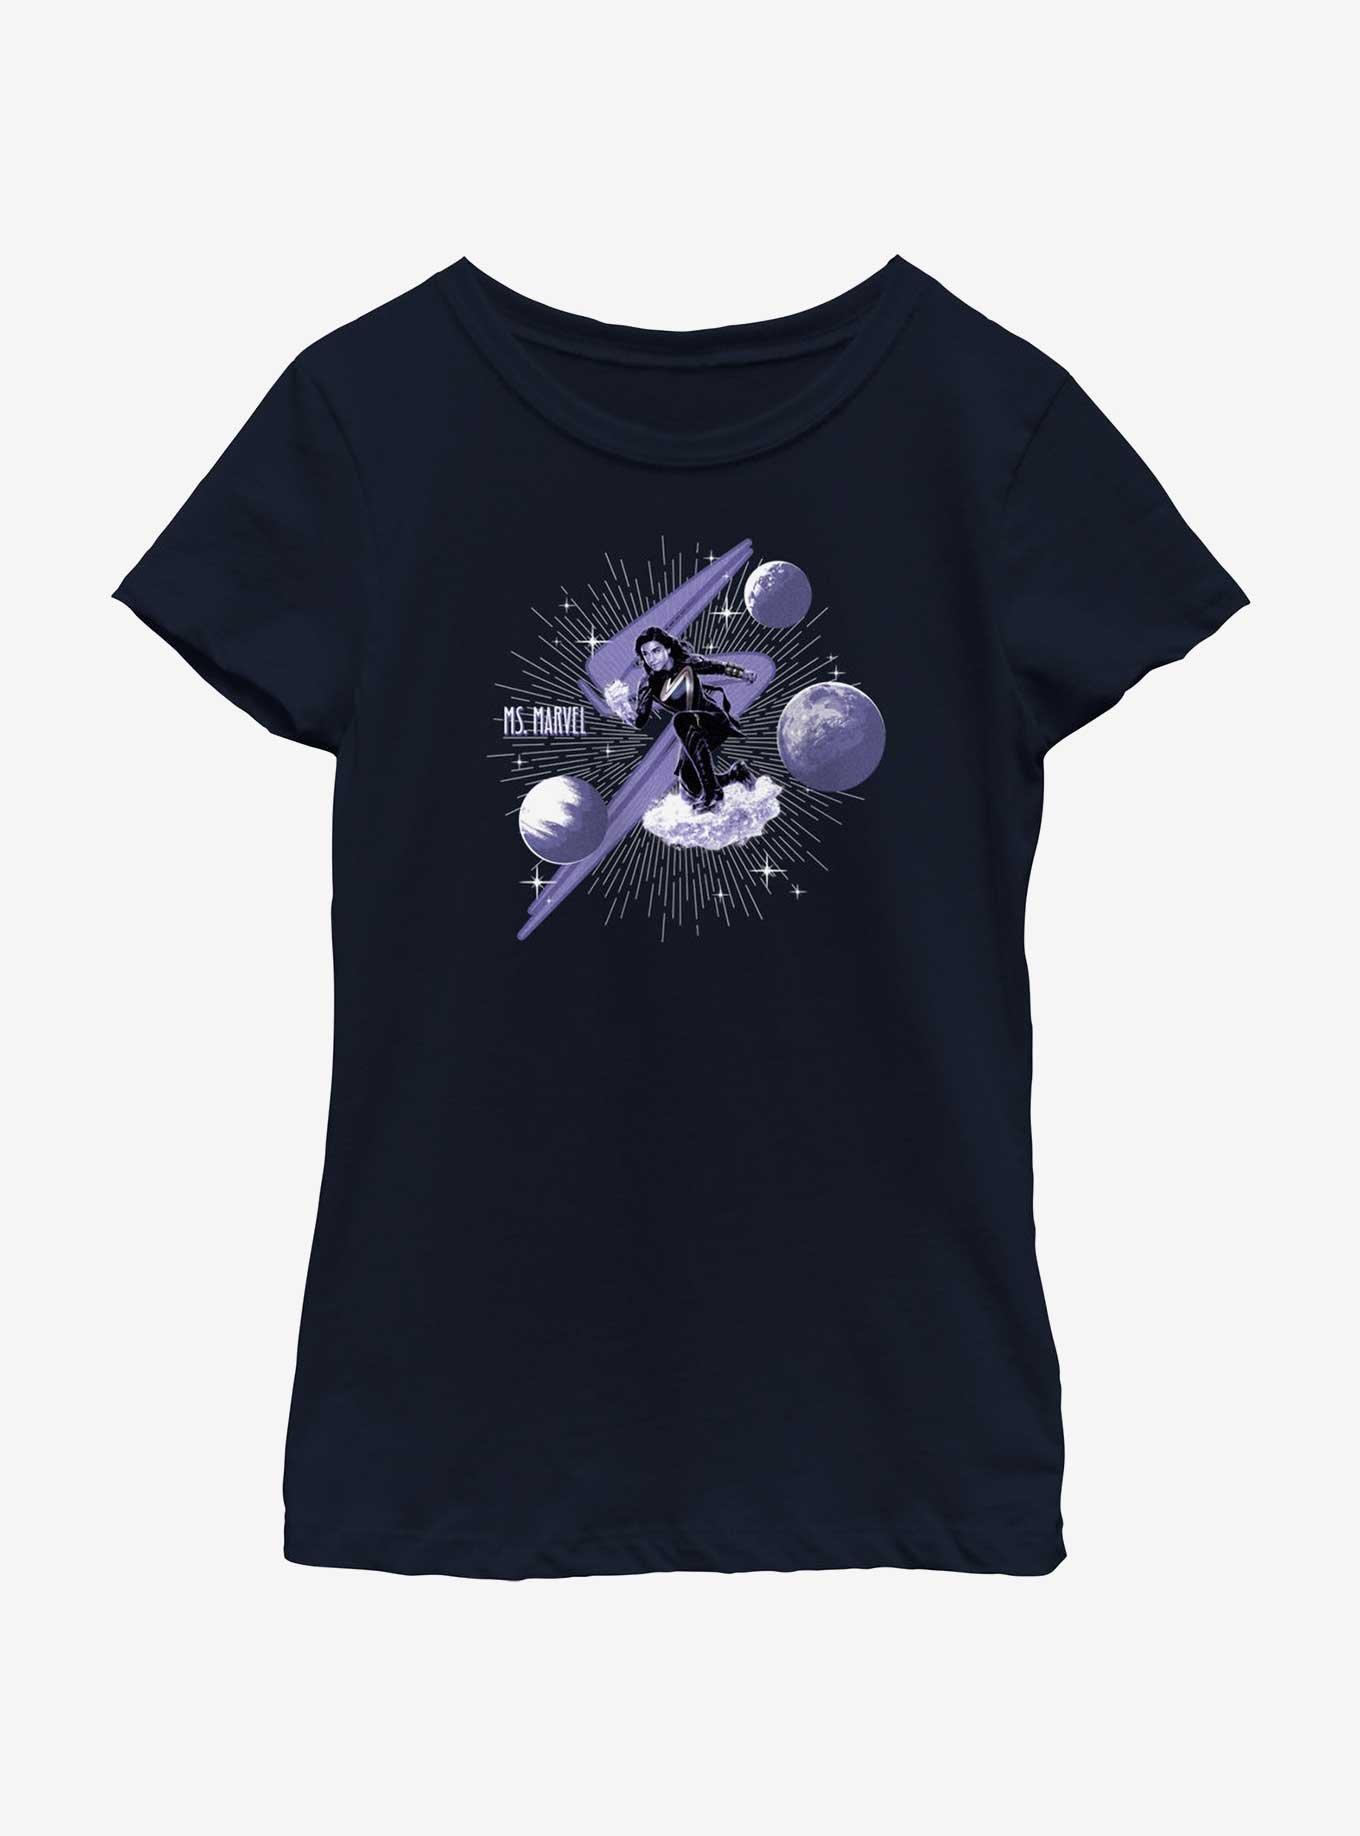 Marvel The Marvels Ms. Marvel Interplanetary Youth Girls T-Shirt, NAVY, hi-res